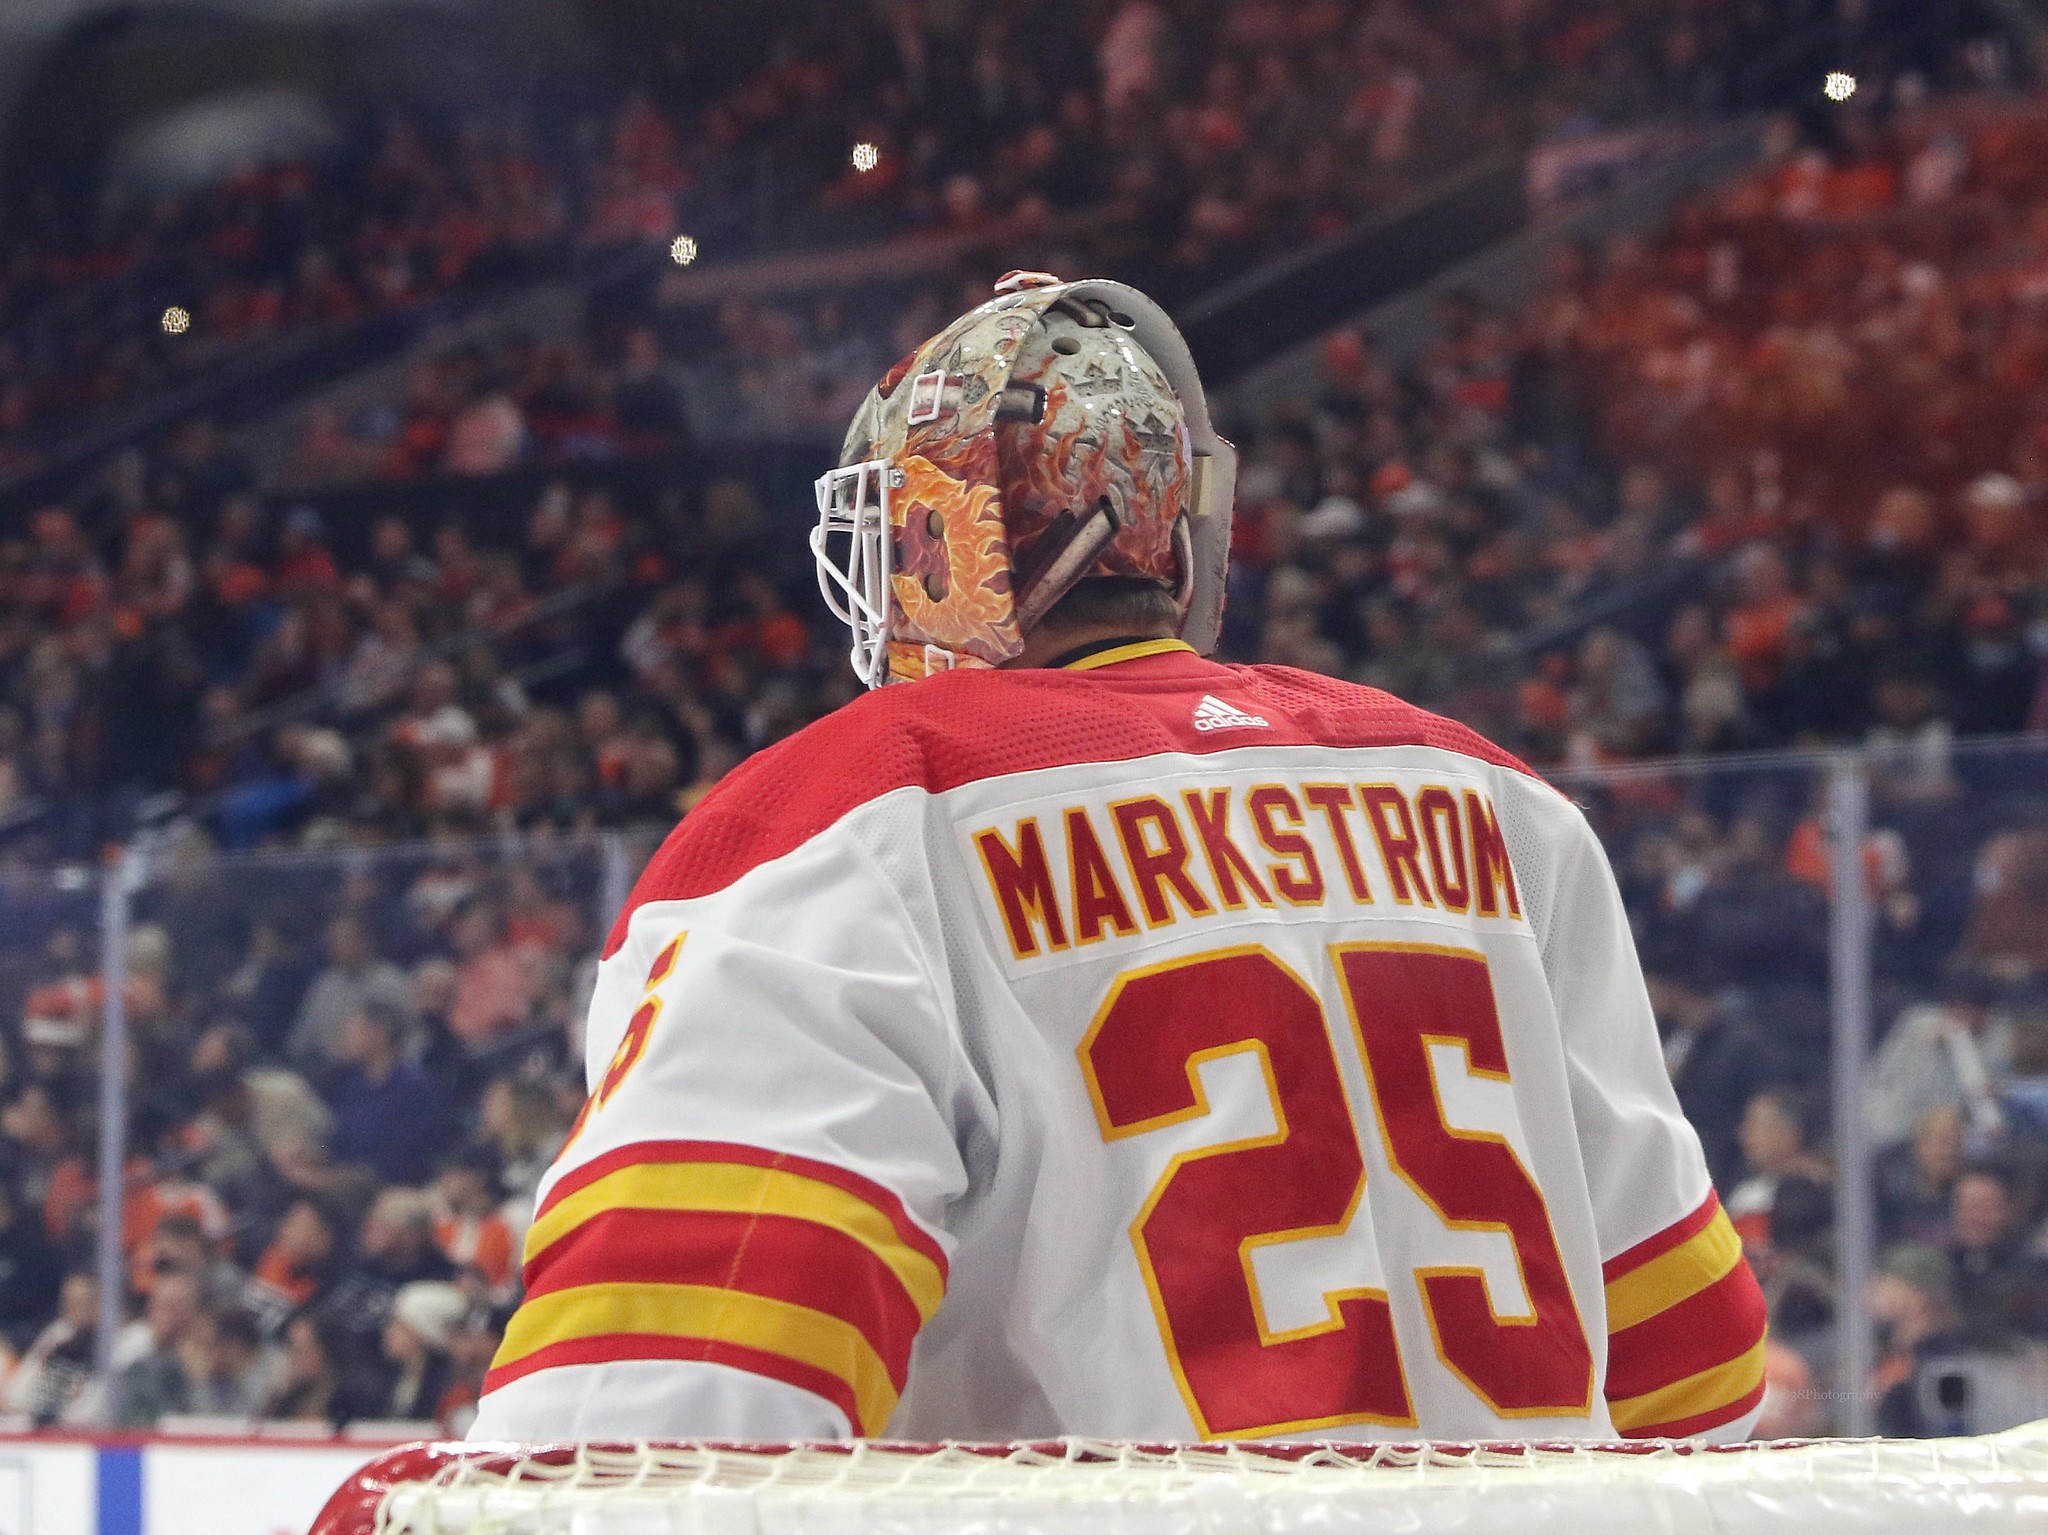 Markstrom's new Flames goalie gear is triggering Canucks fans